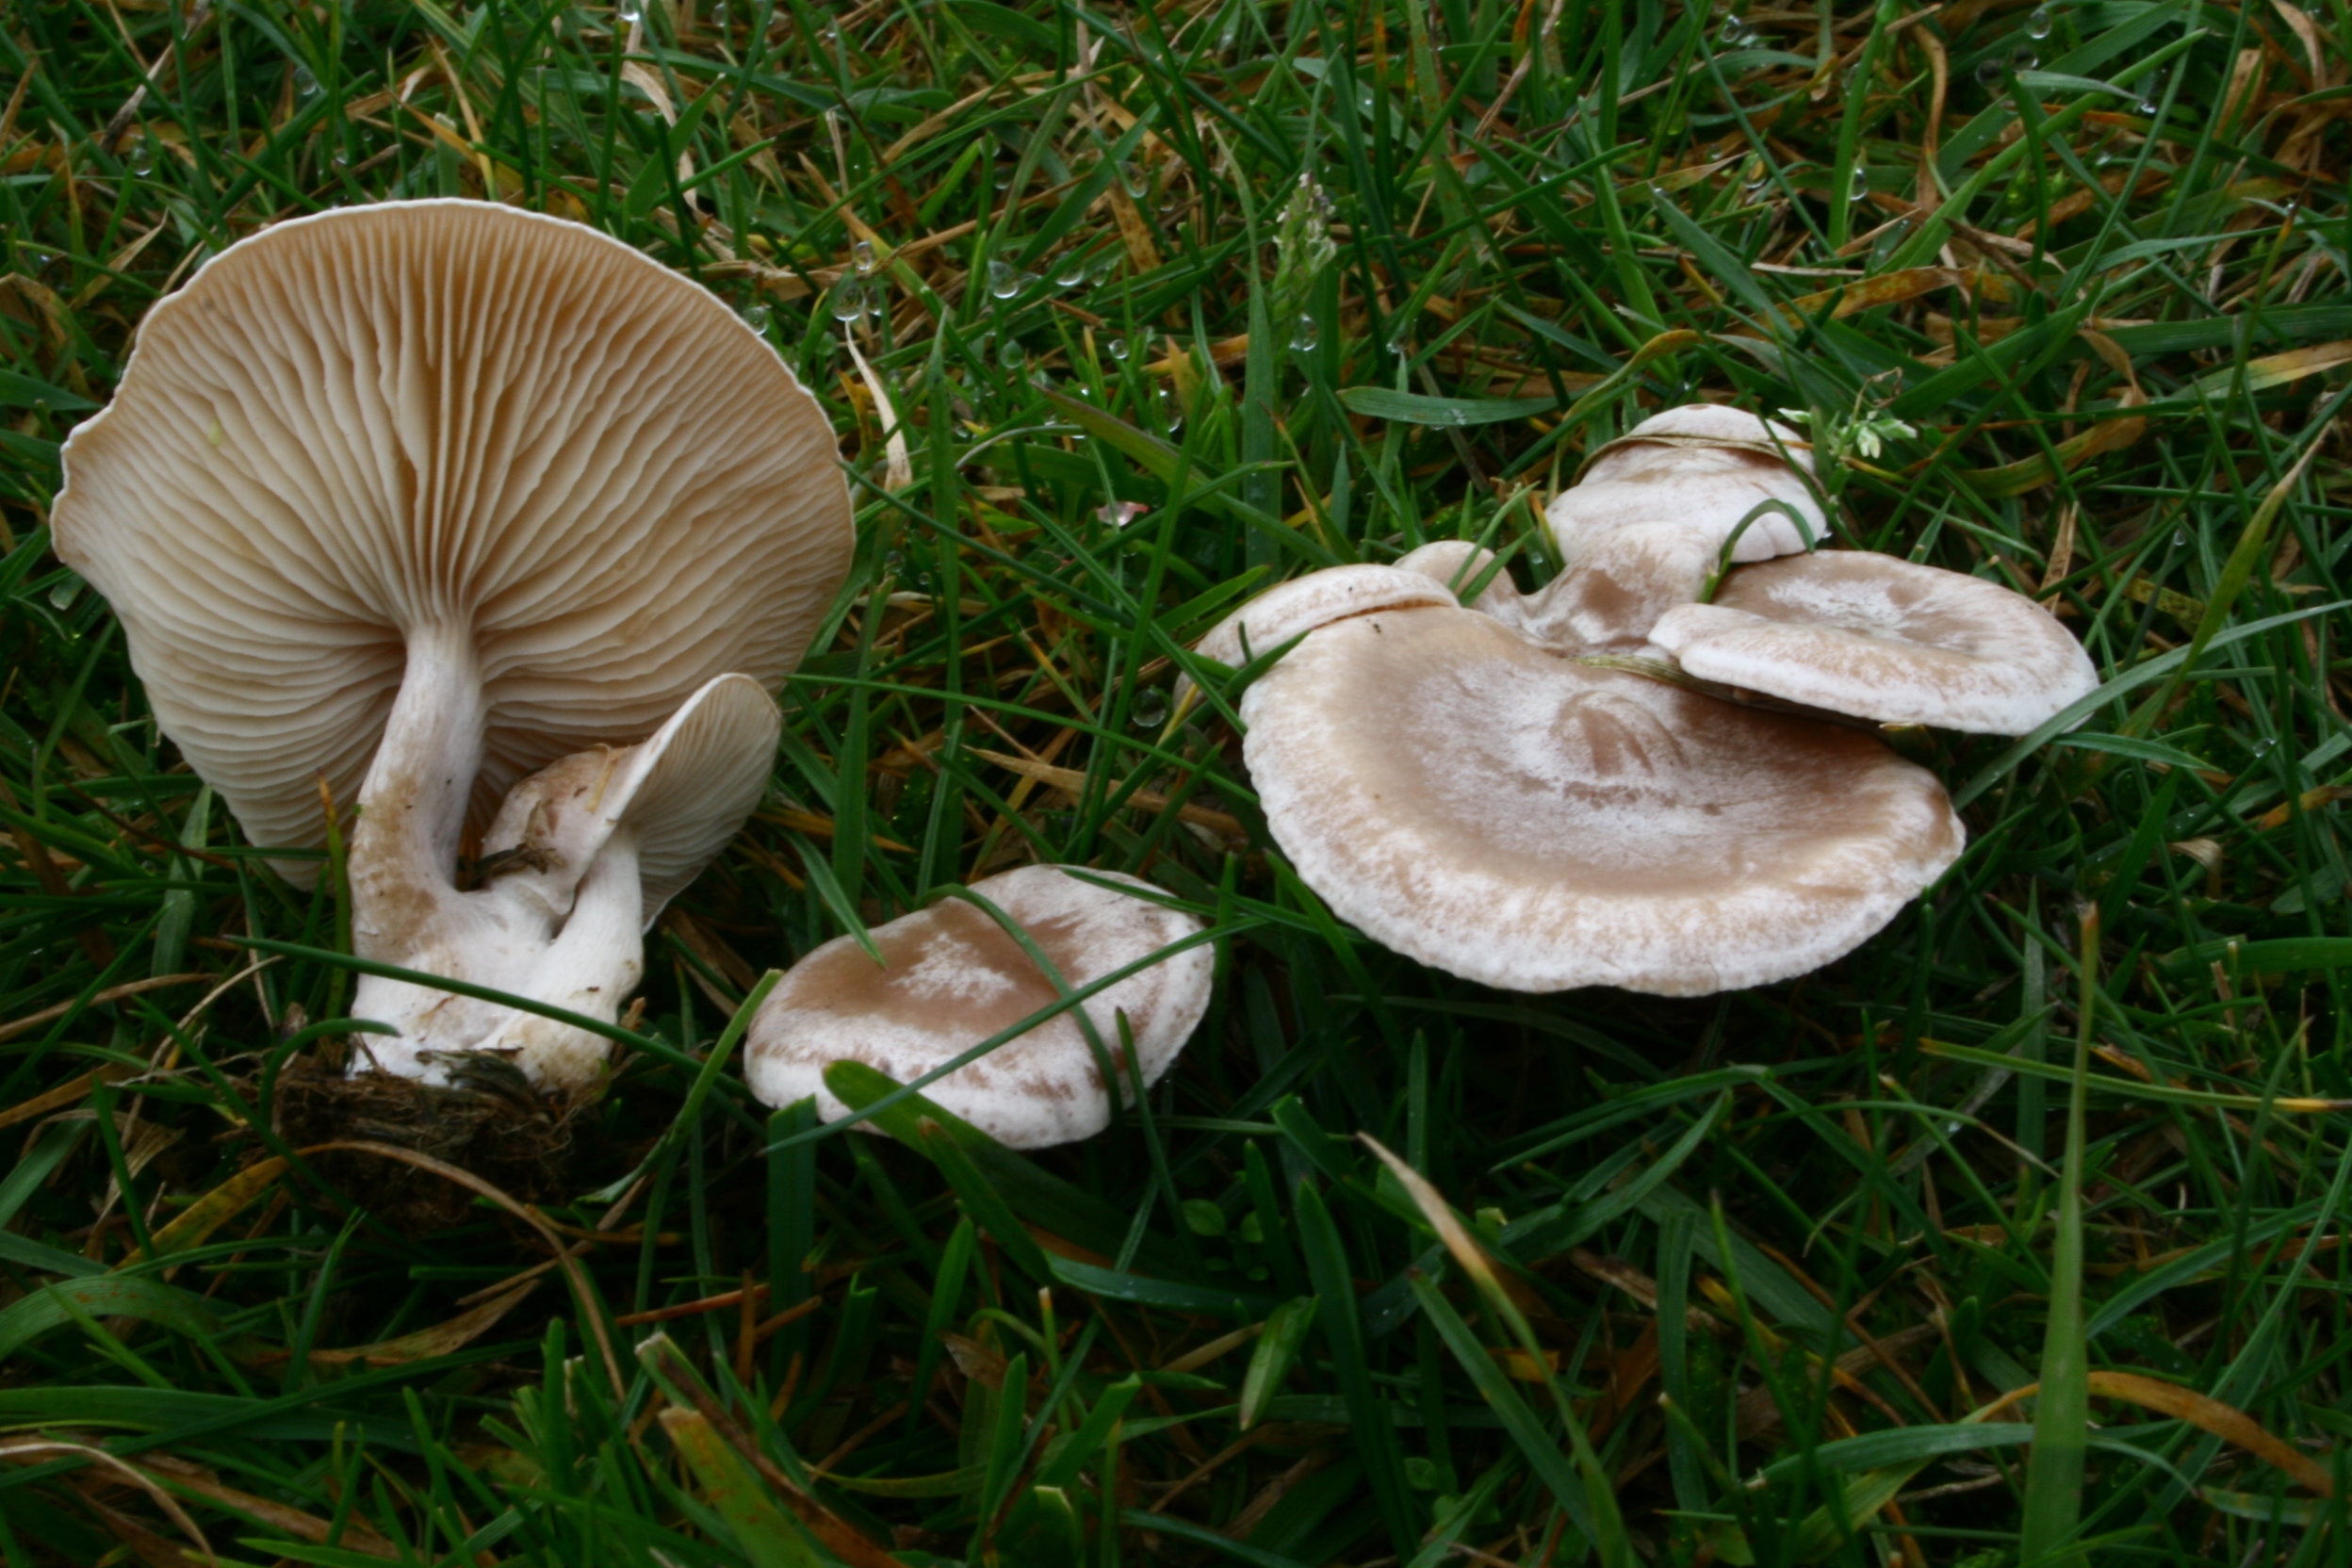 NW Mushrooms pic 6.jpg